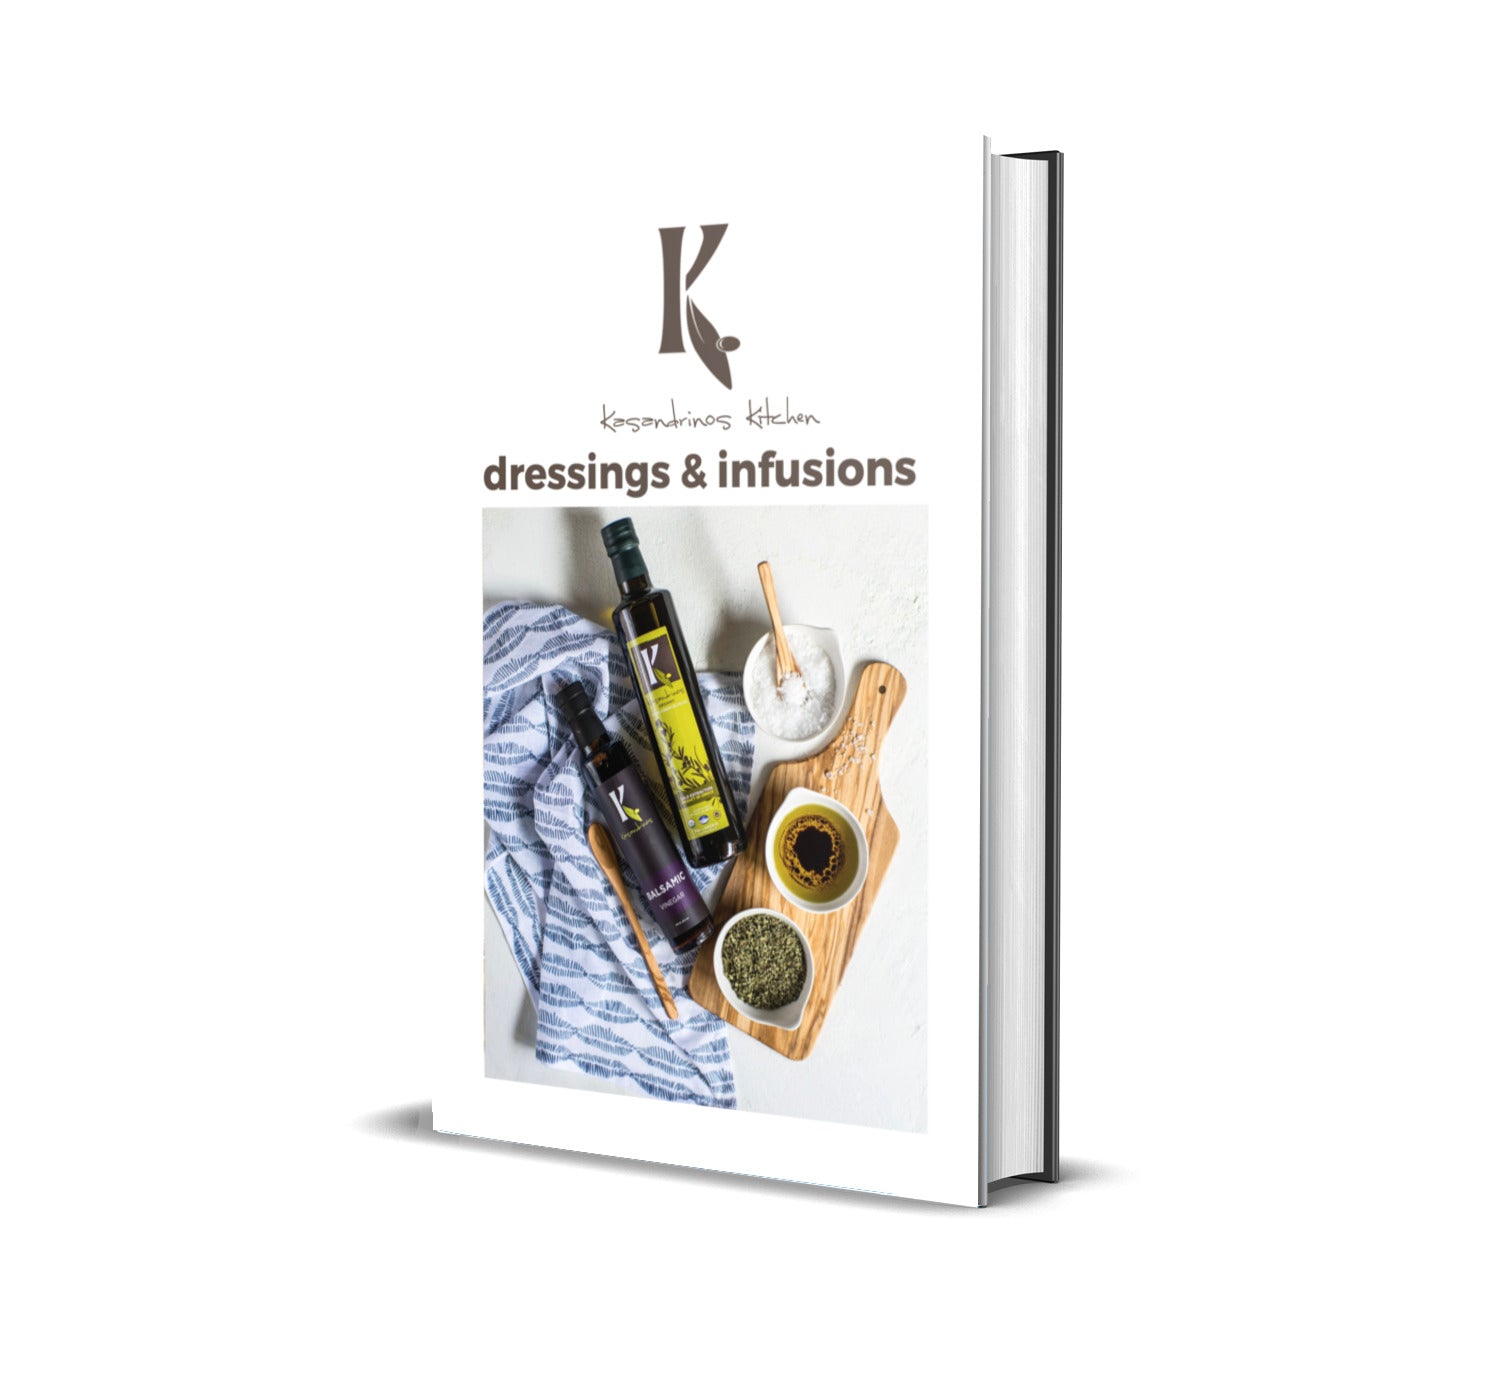 Kasandrinos Kitchen: Dressings & Infusions